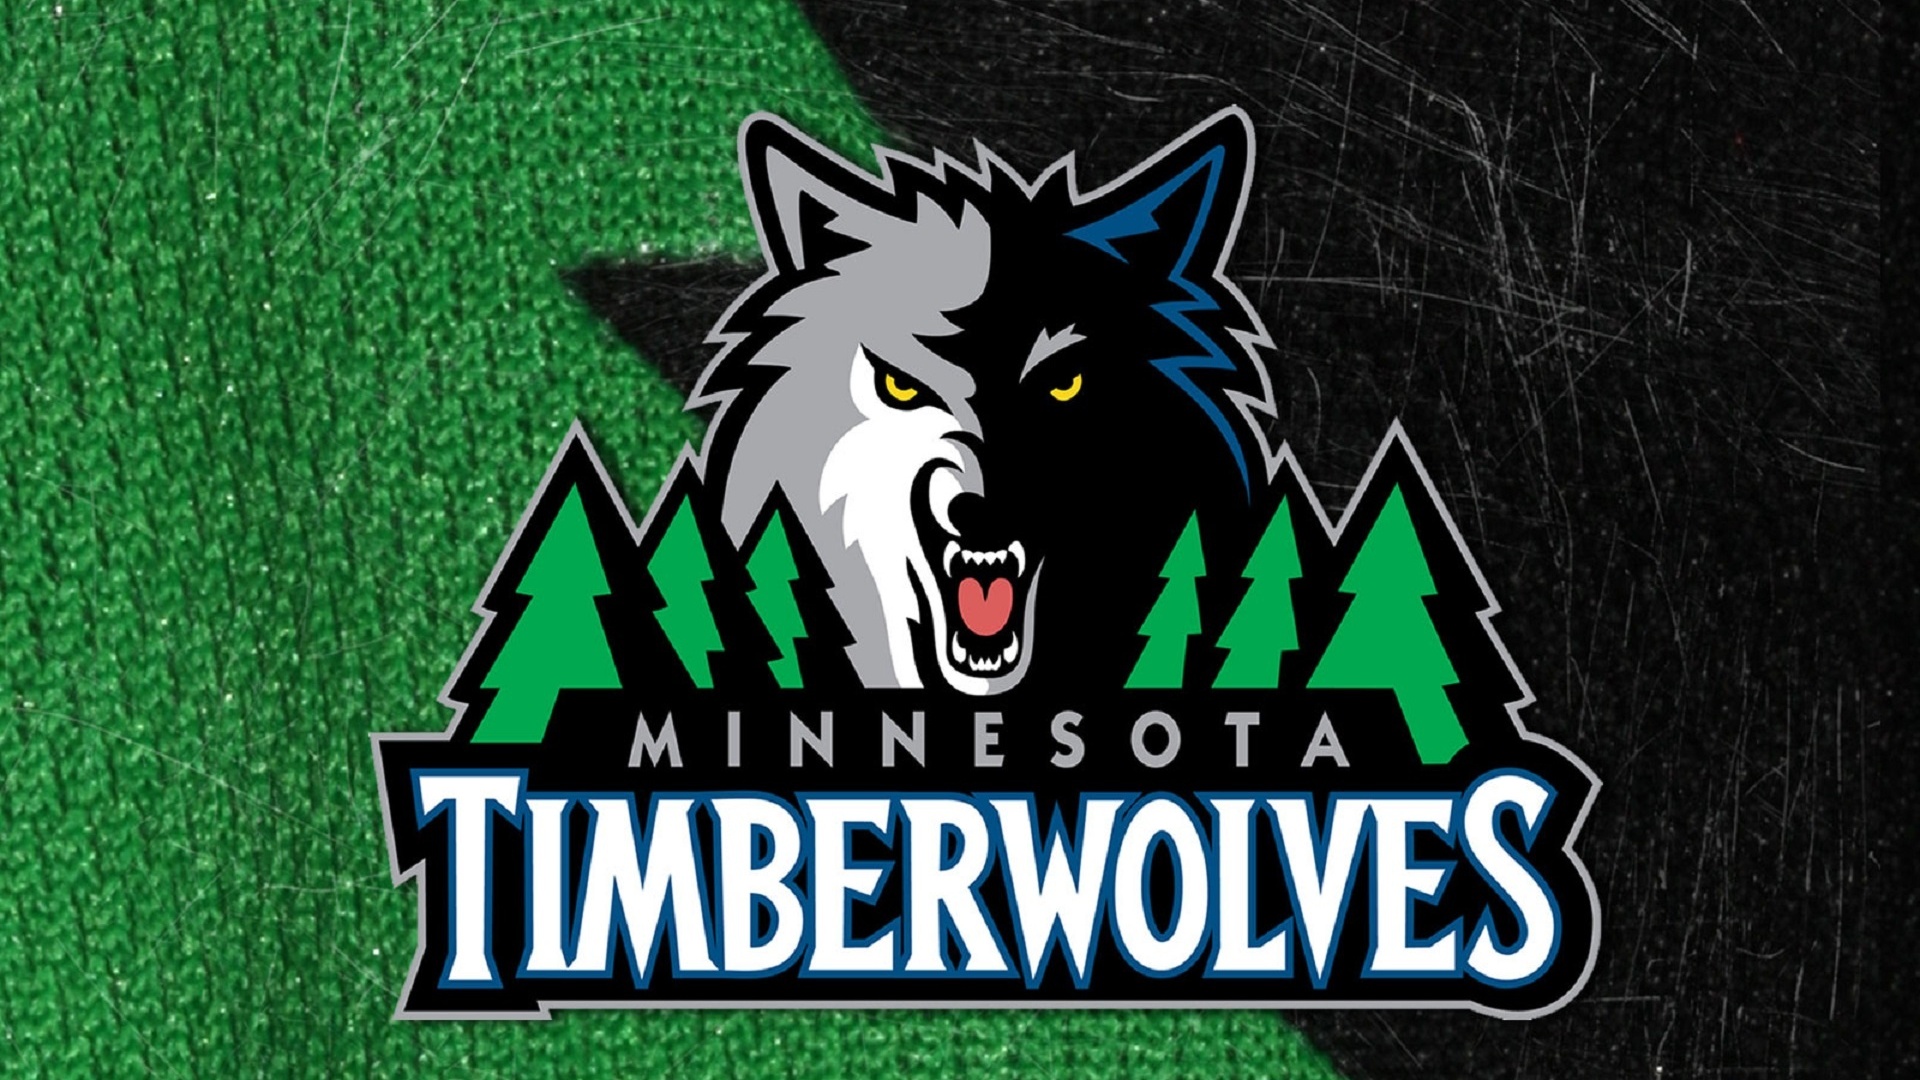 Minnesota timberwolves logo wallpapers